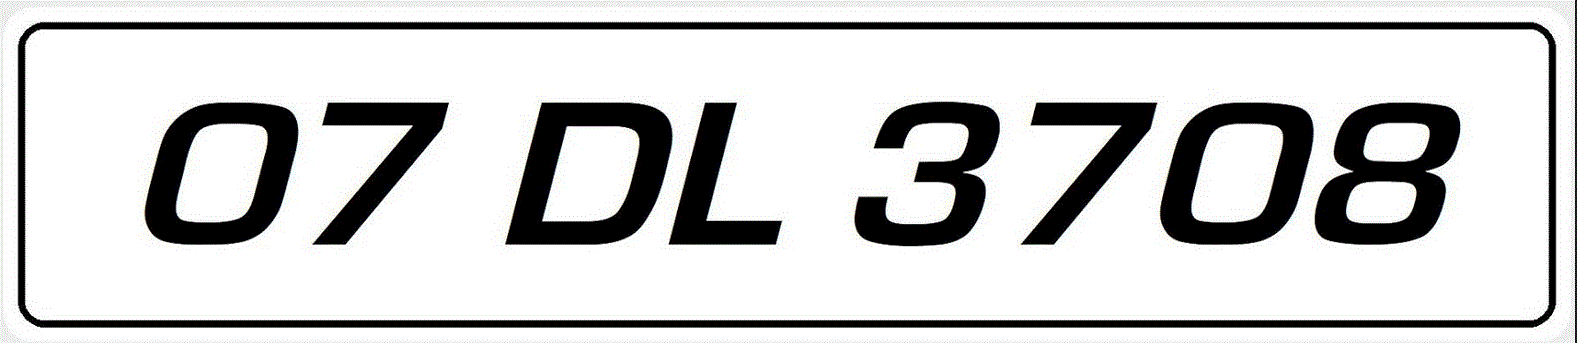 Eurostile Font on white acrylic plate (Pair)